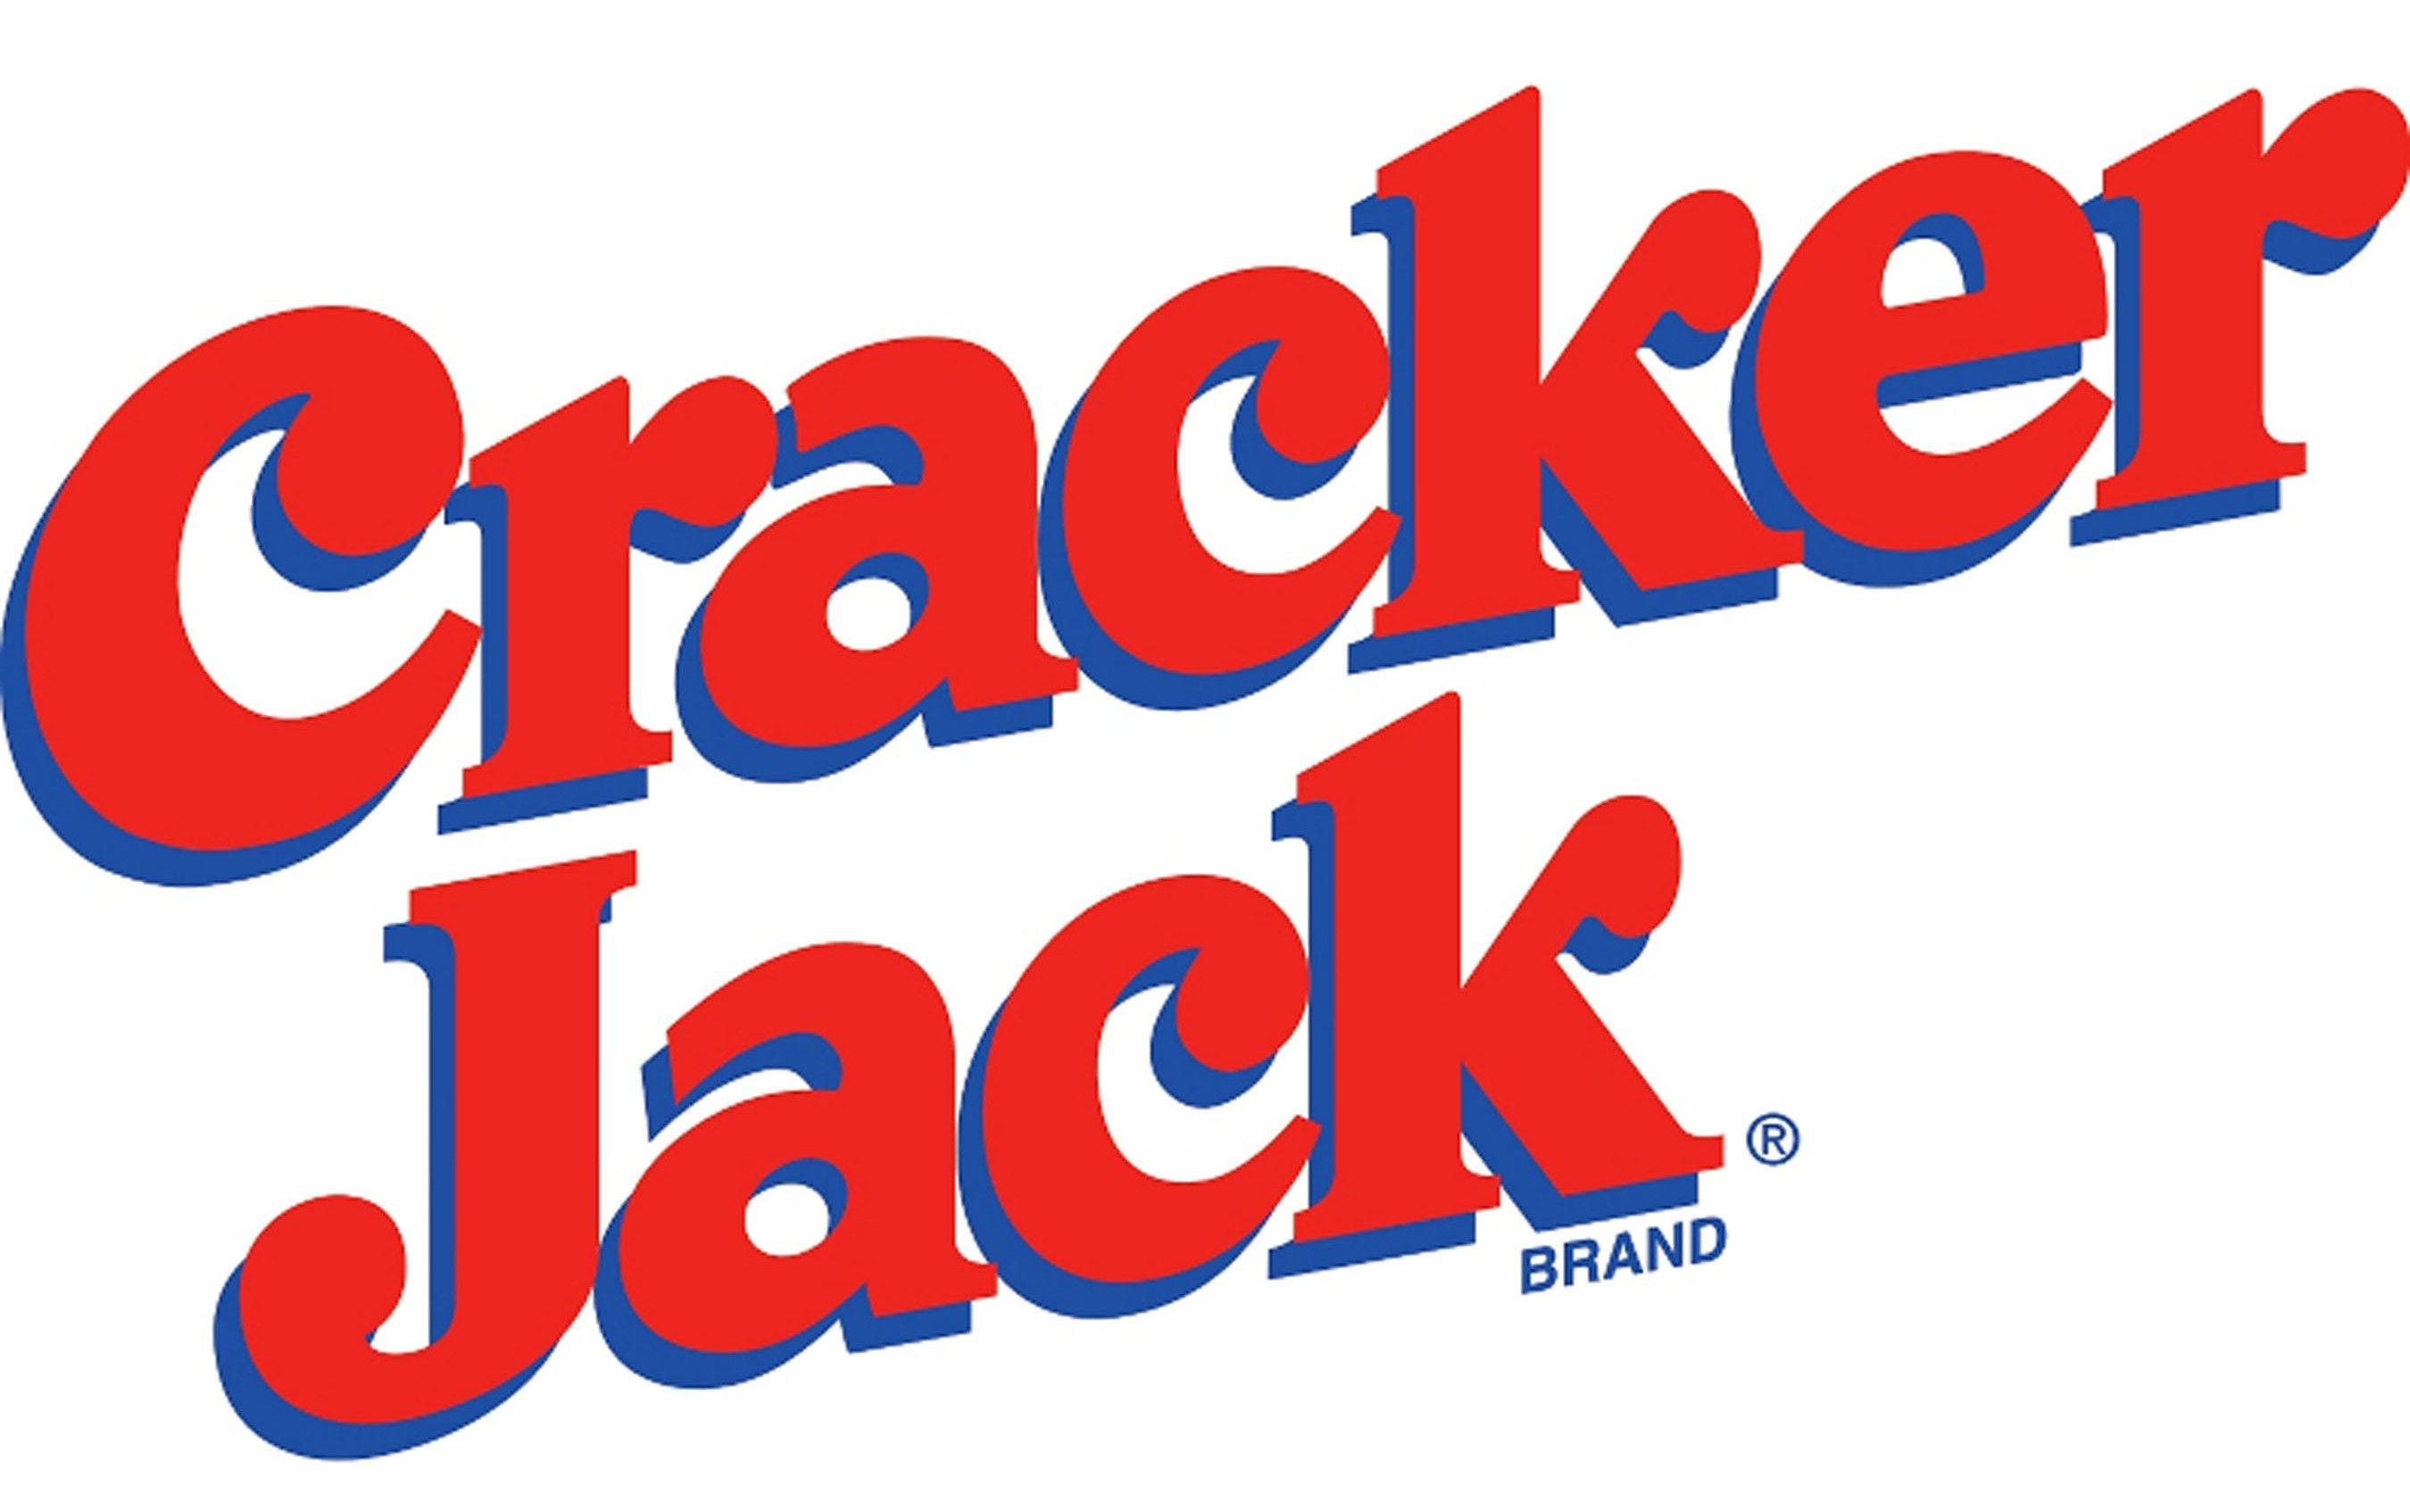 Cracker Logo - Cracker jack Logos